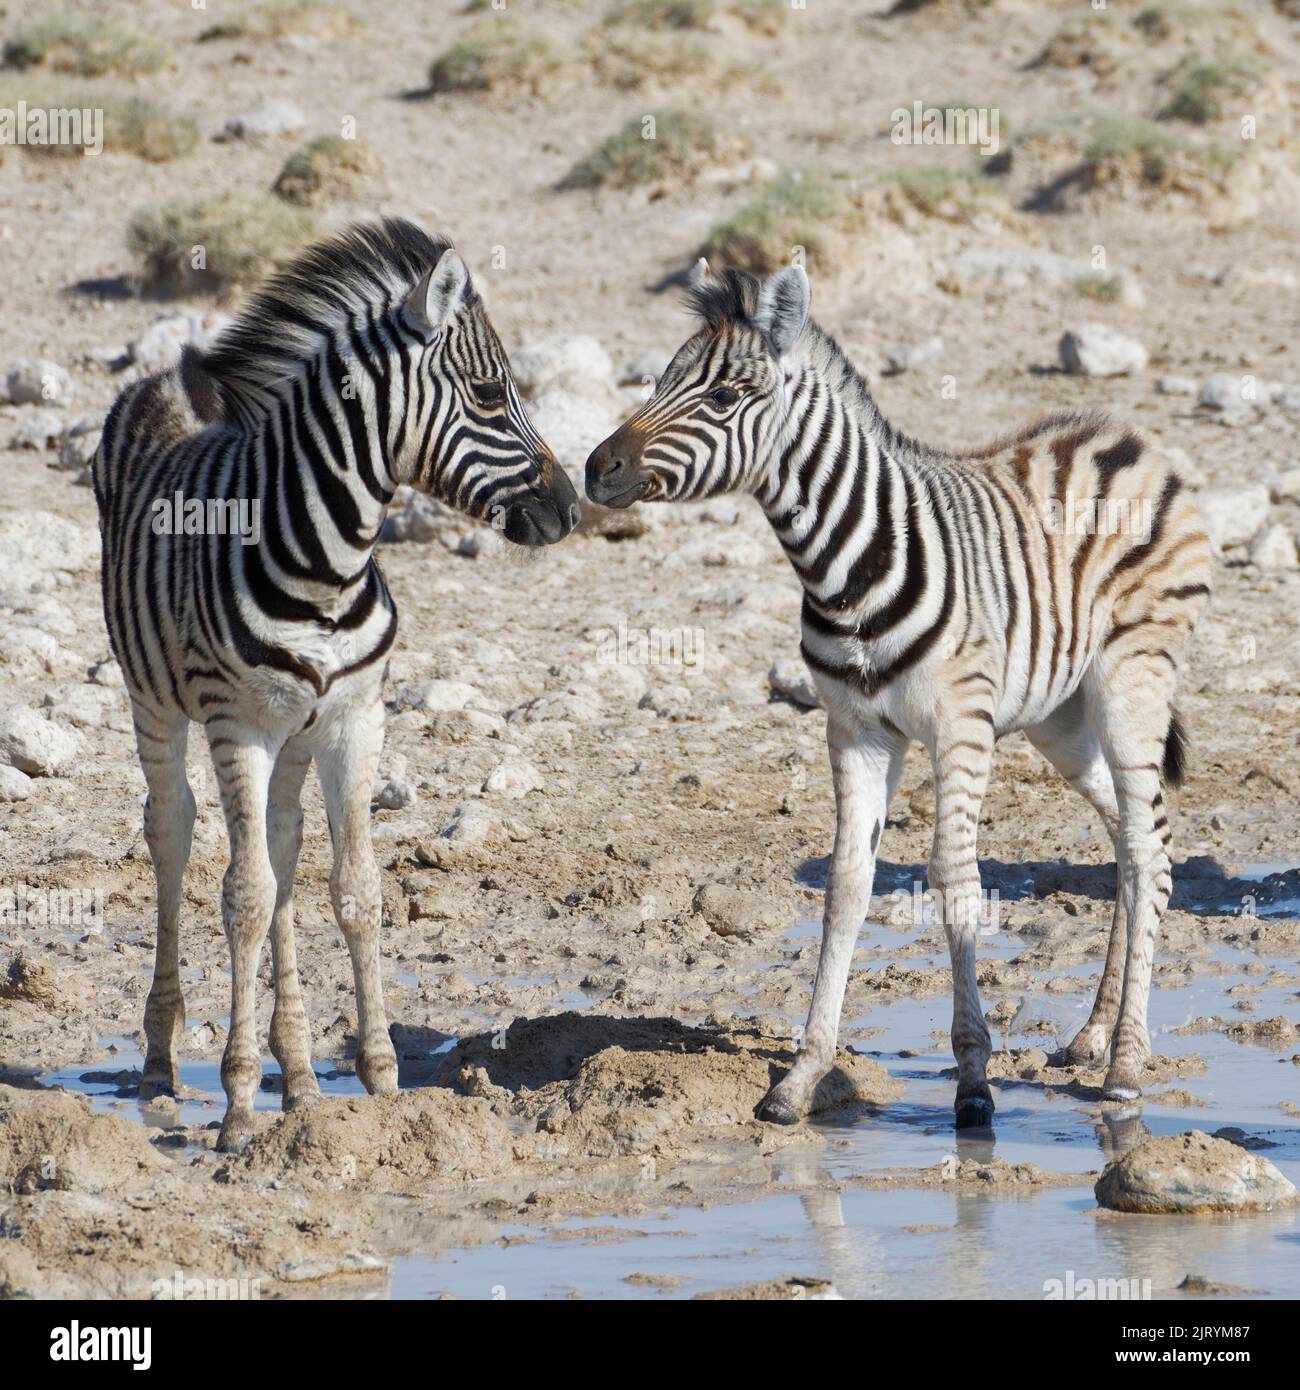 Burchells zebras (Equus quagga burchellii), two zebra foals standing at waterhole, nose to nose, Etosha National Park, Namibia, Africa Stock Photo